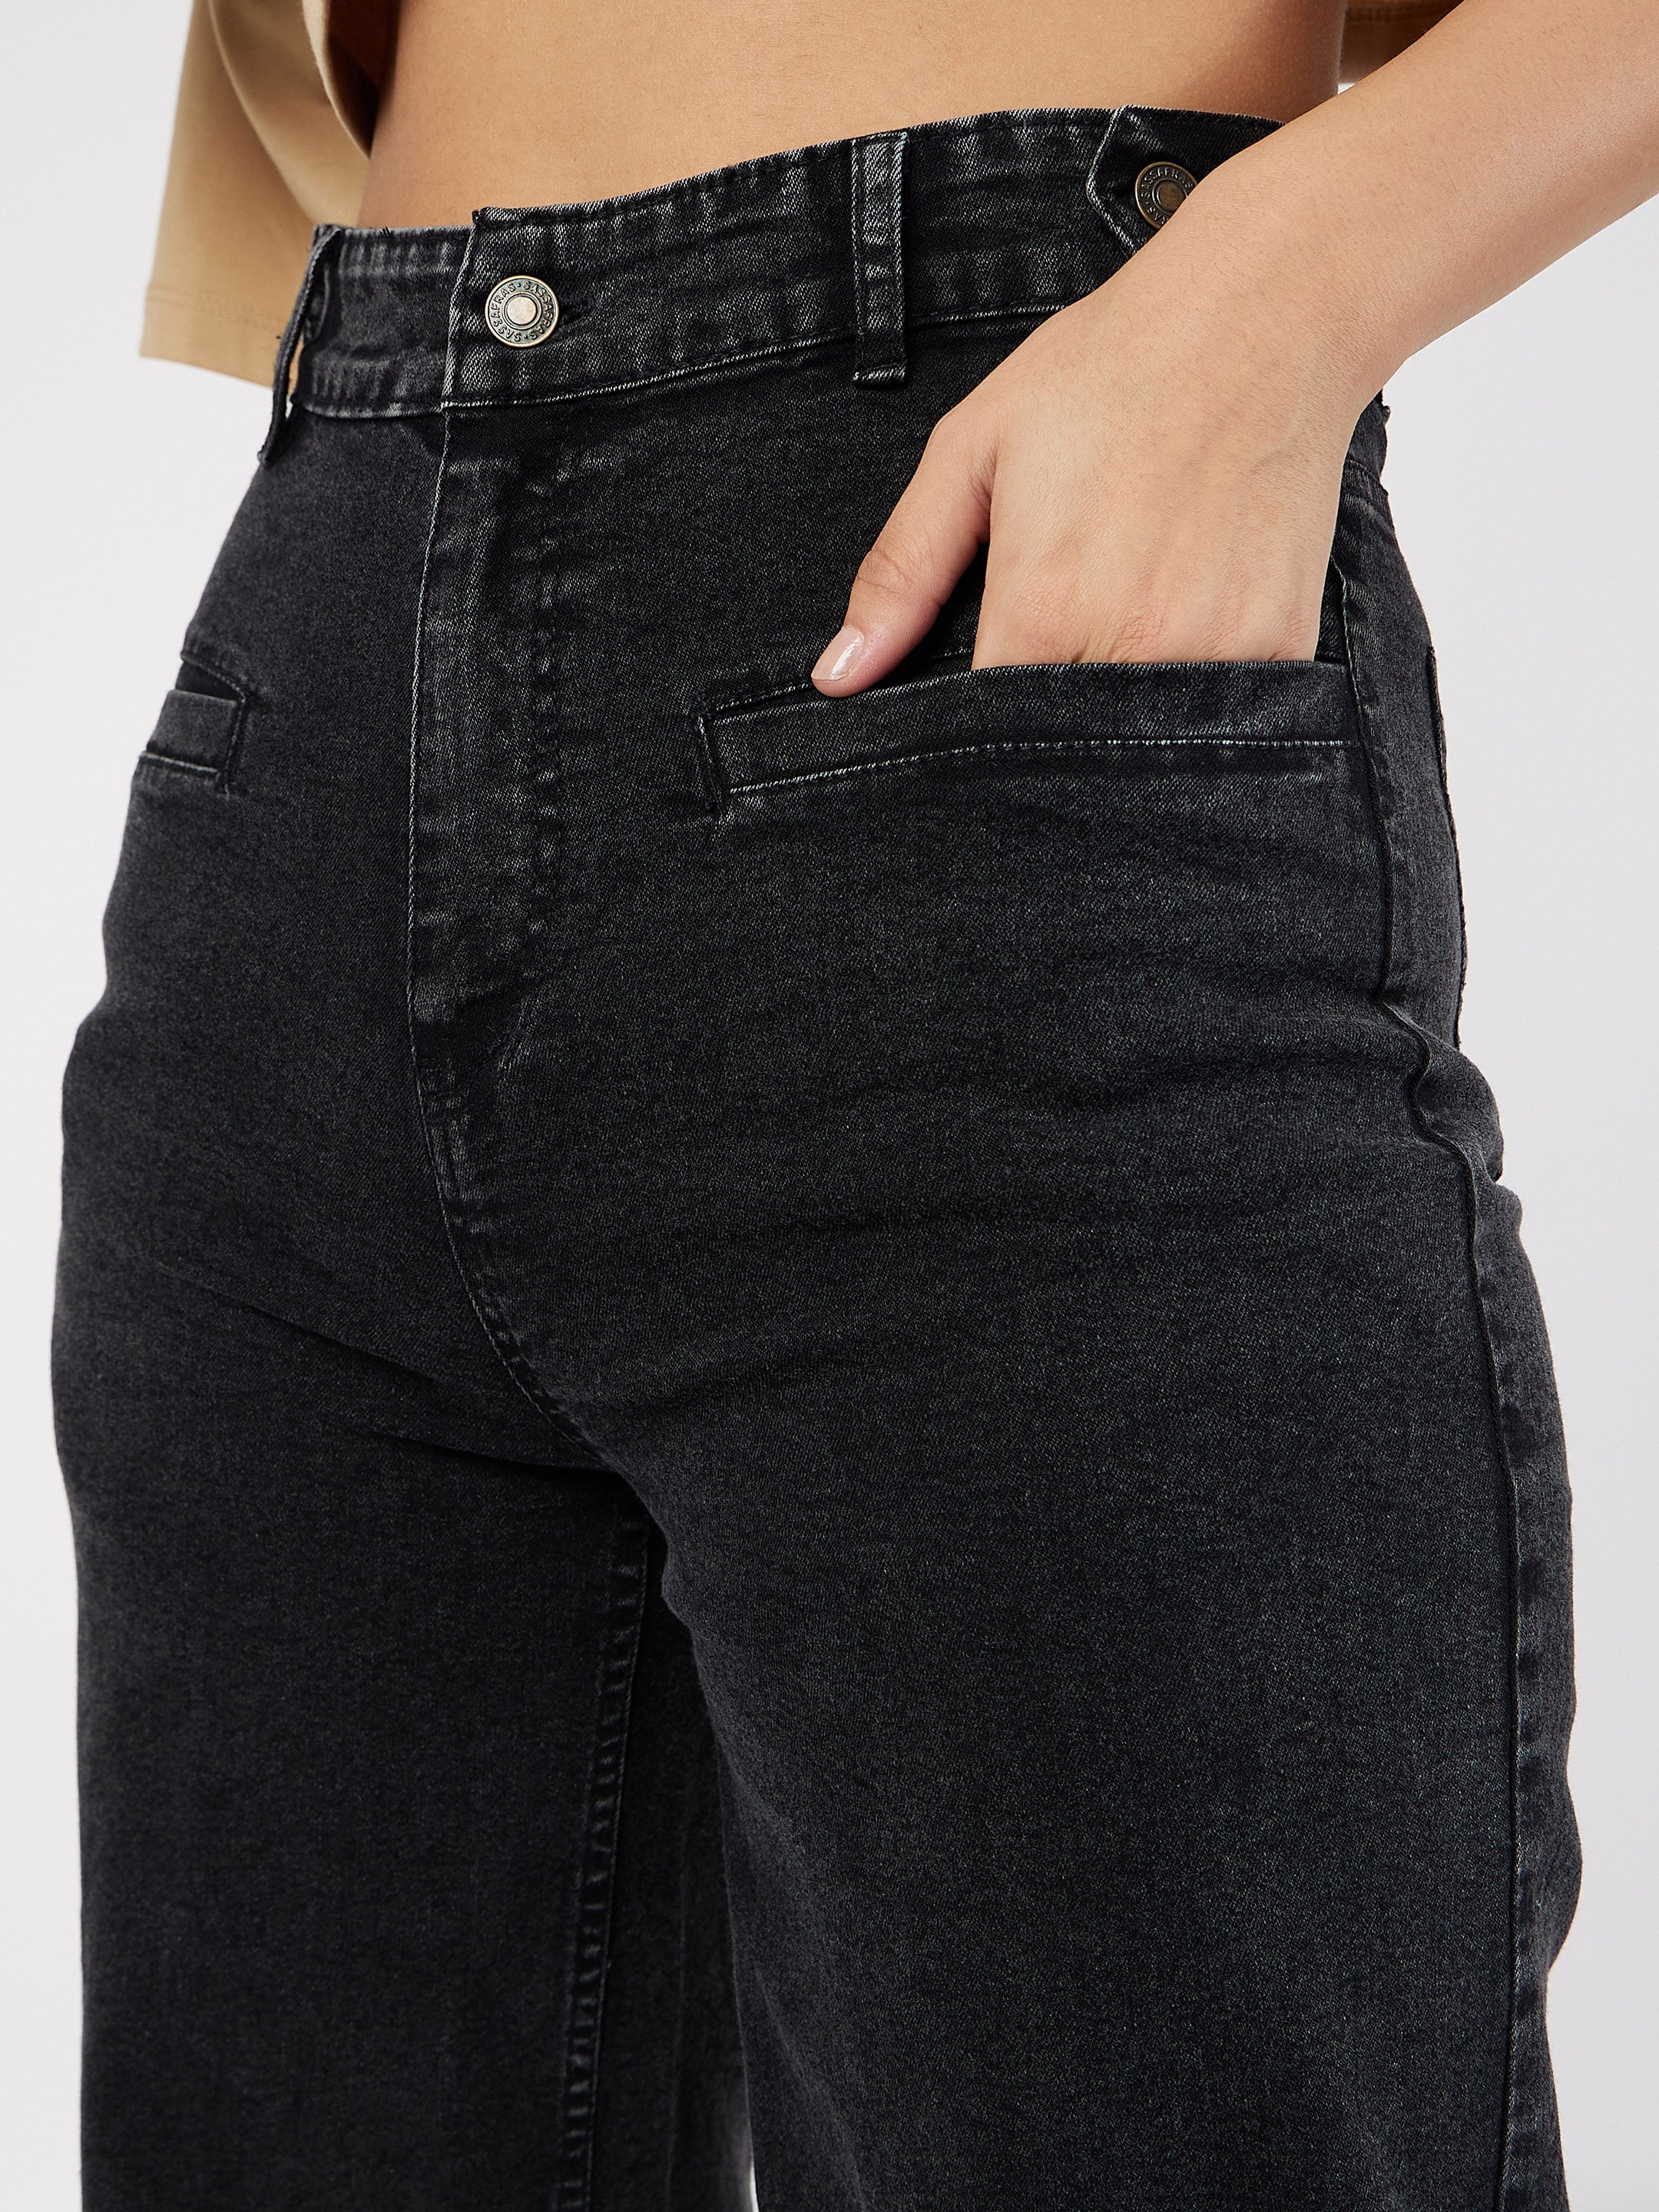 Women's Black Bone Pocket Straight Jeans - Lyush